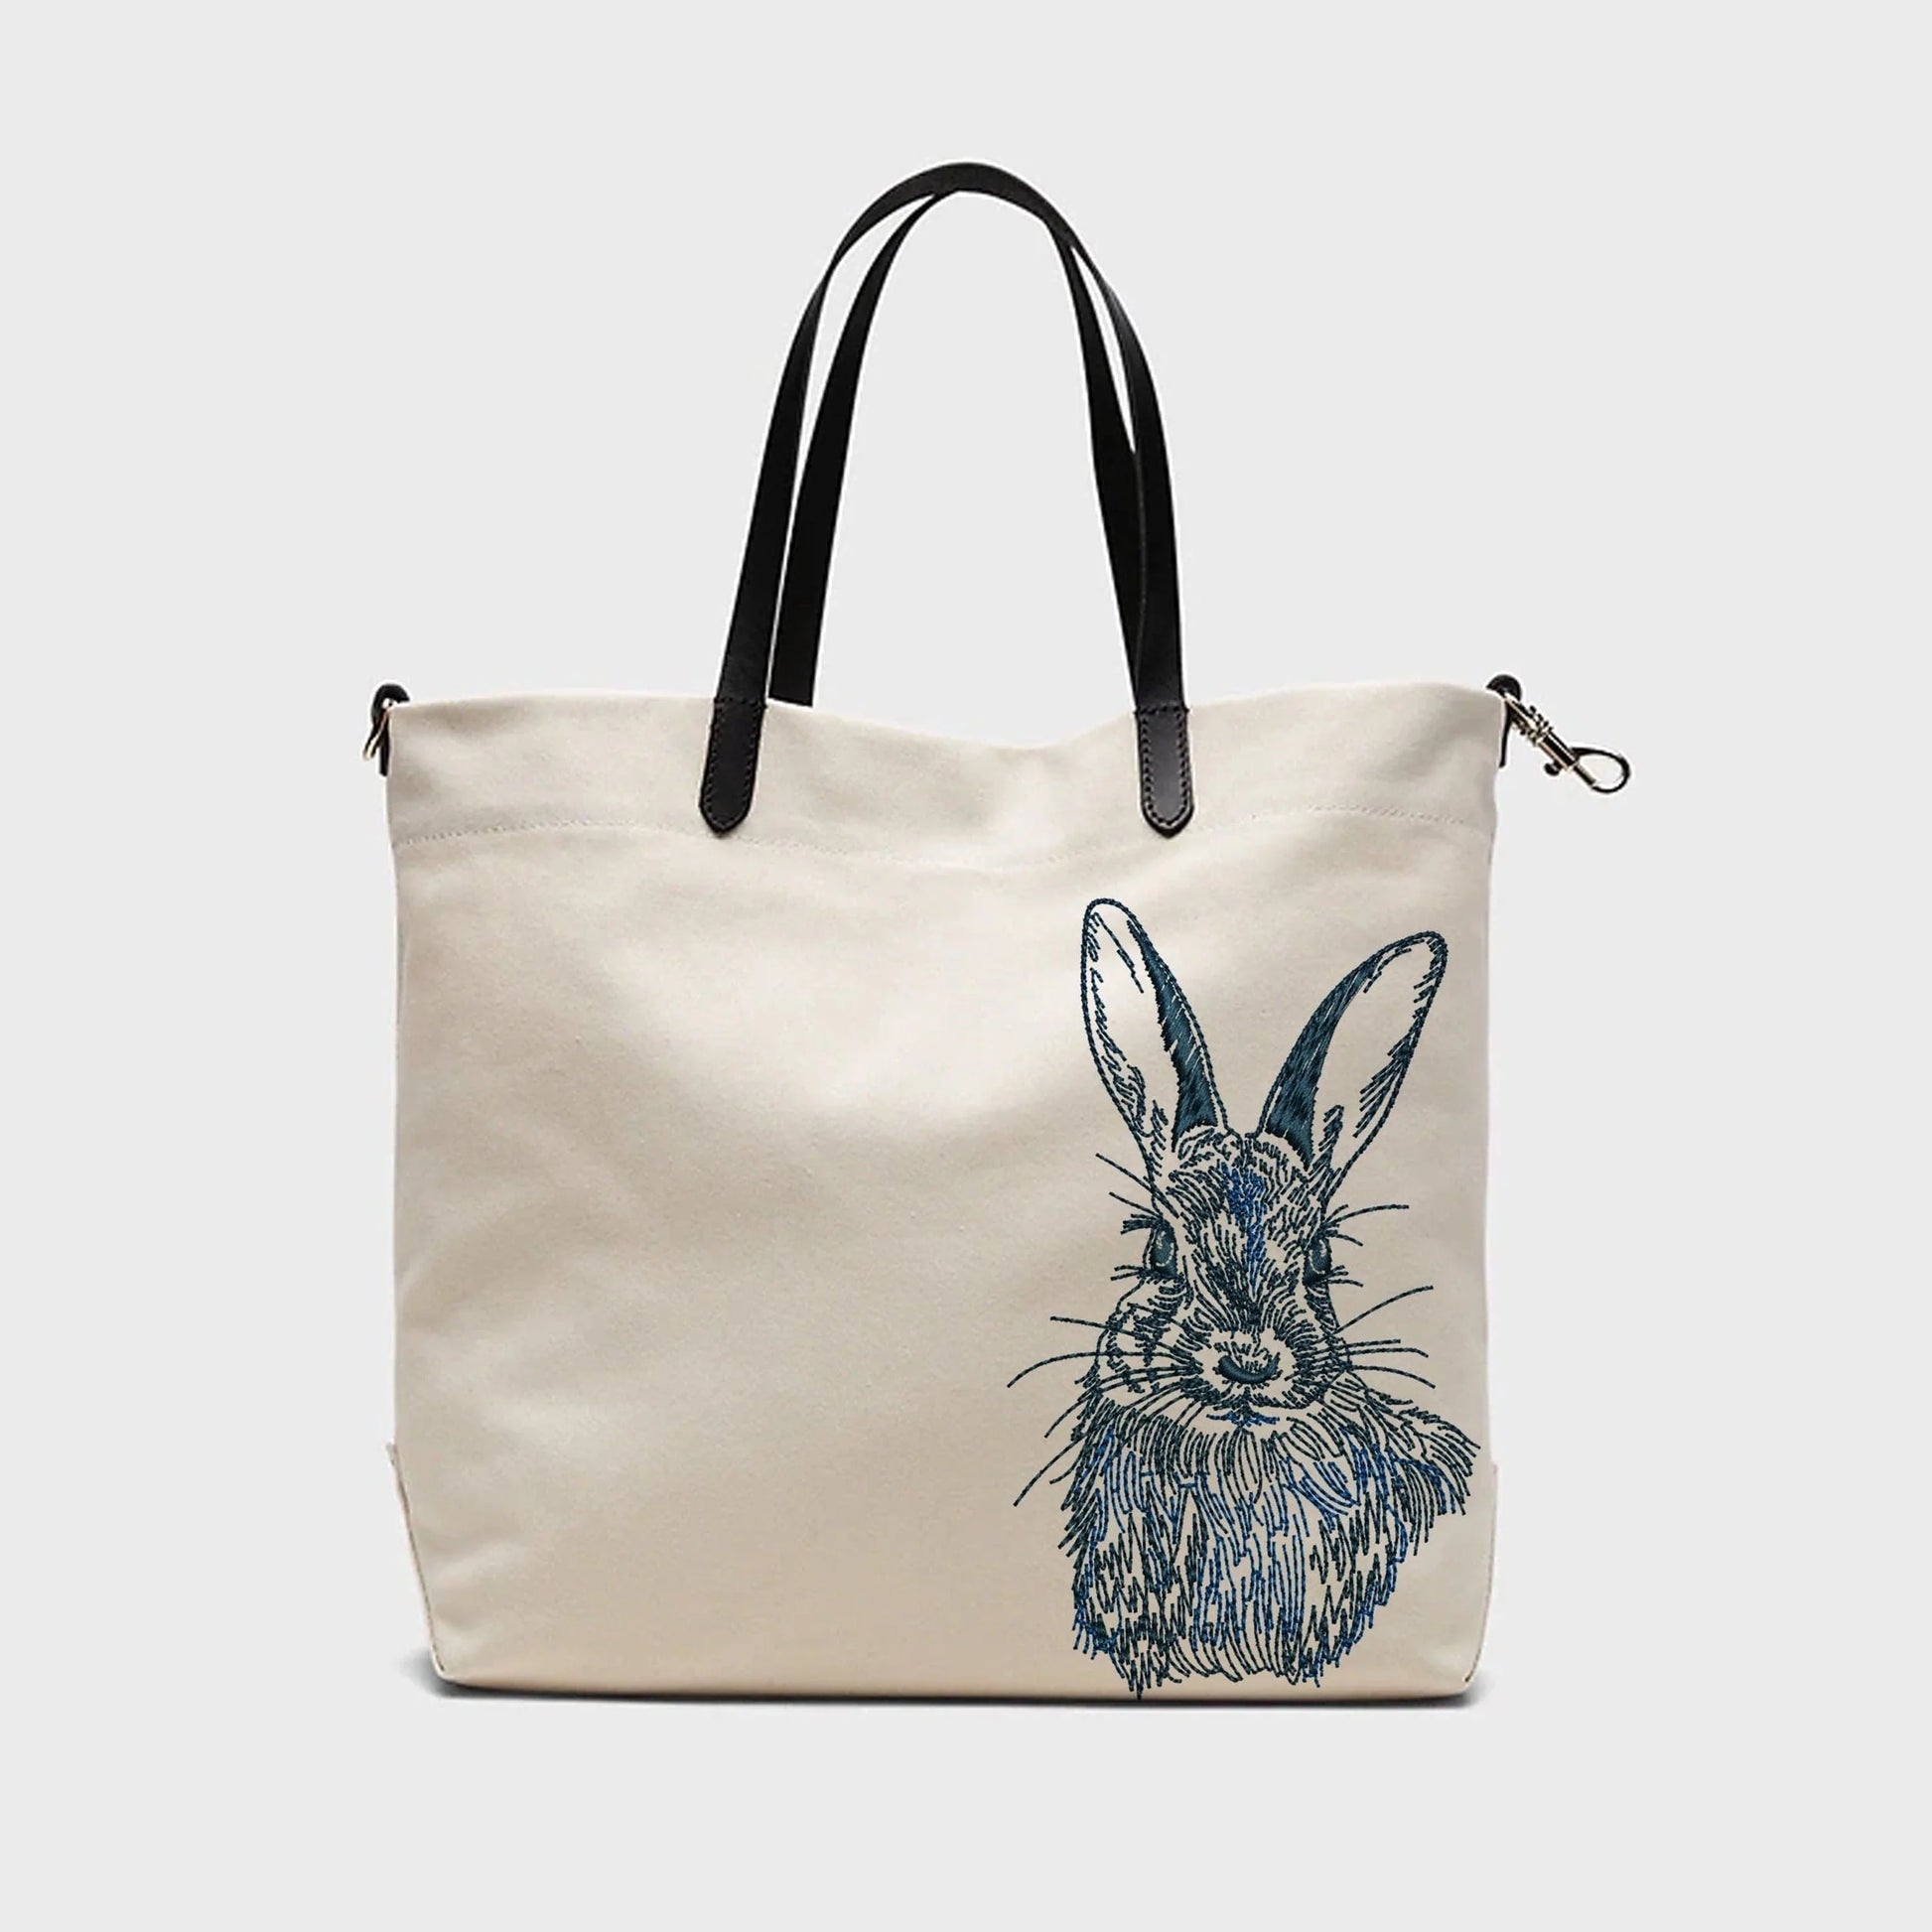 Natural Easter Bunny Machine Embroidery Design on handbag